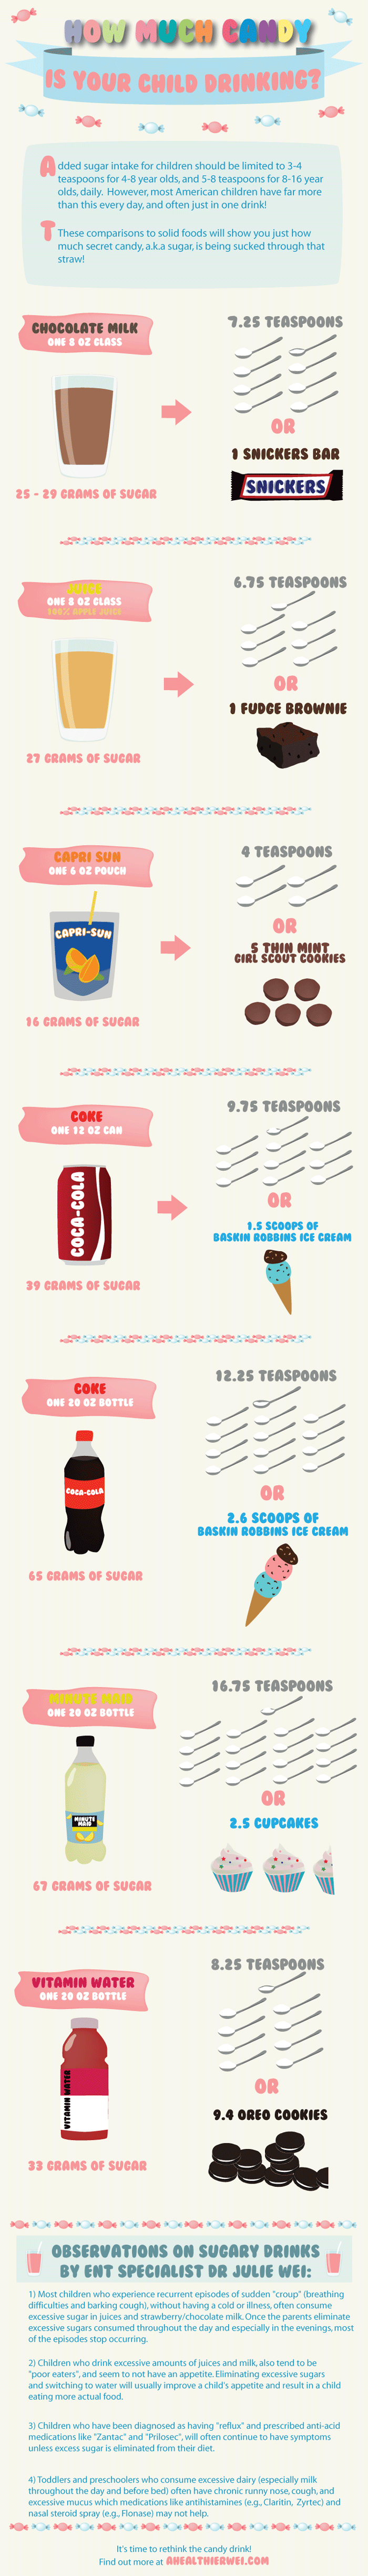 sugary treats infographic